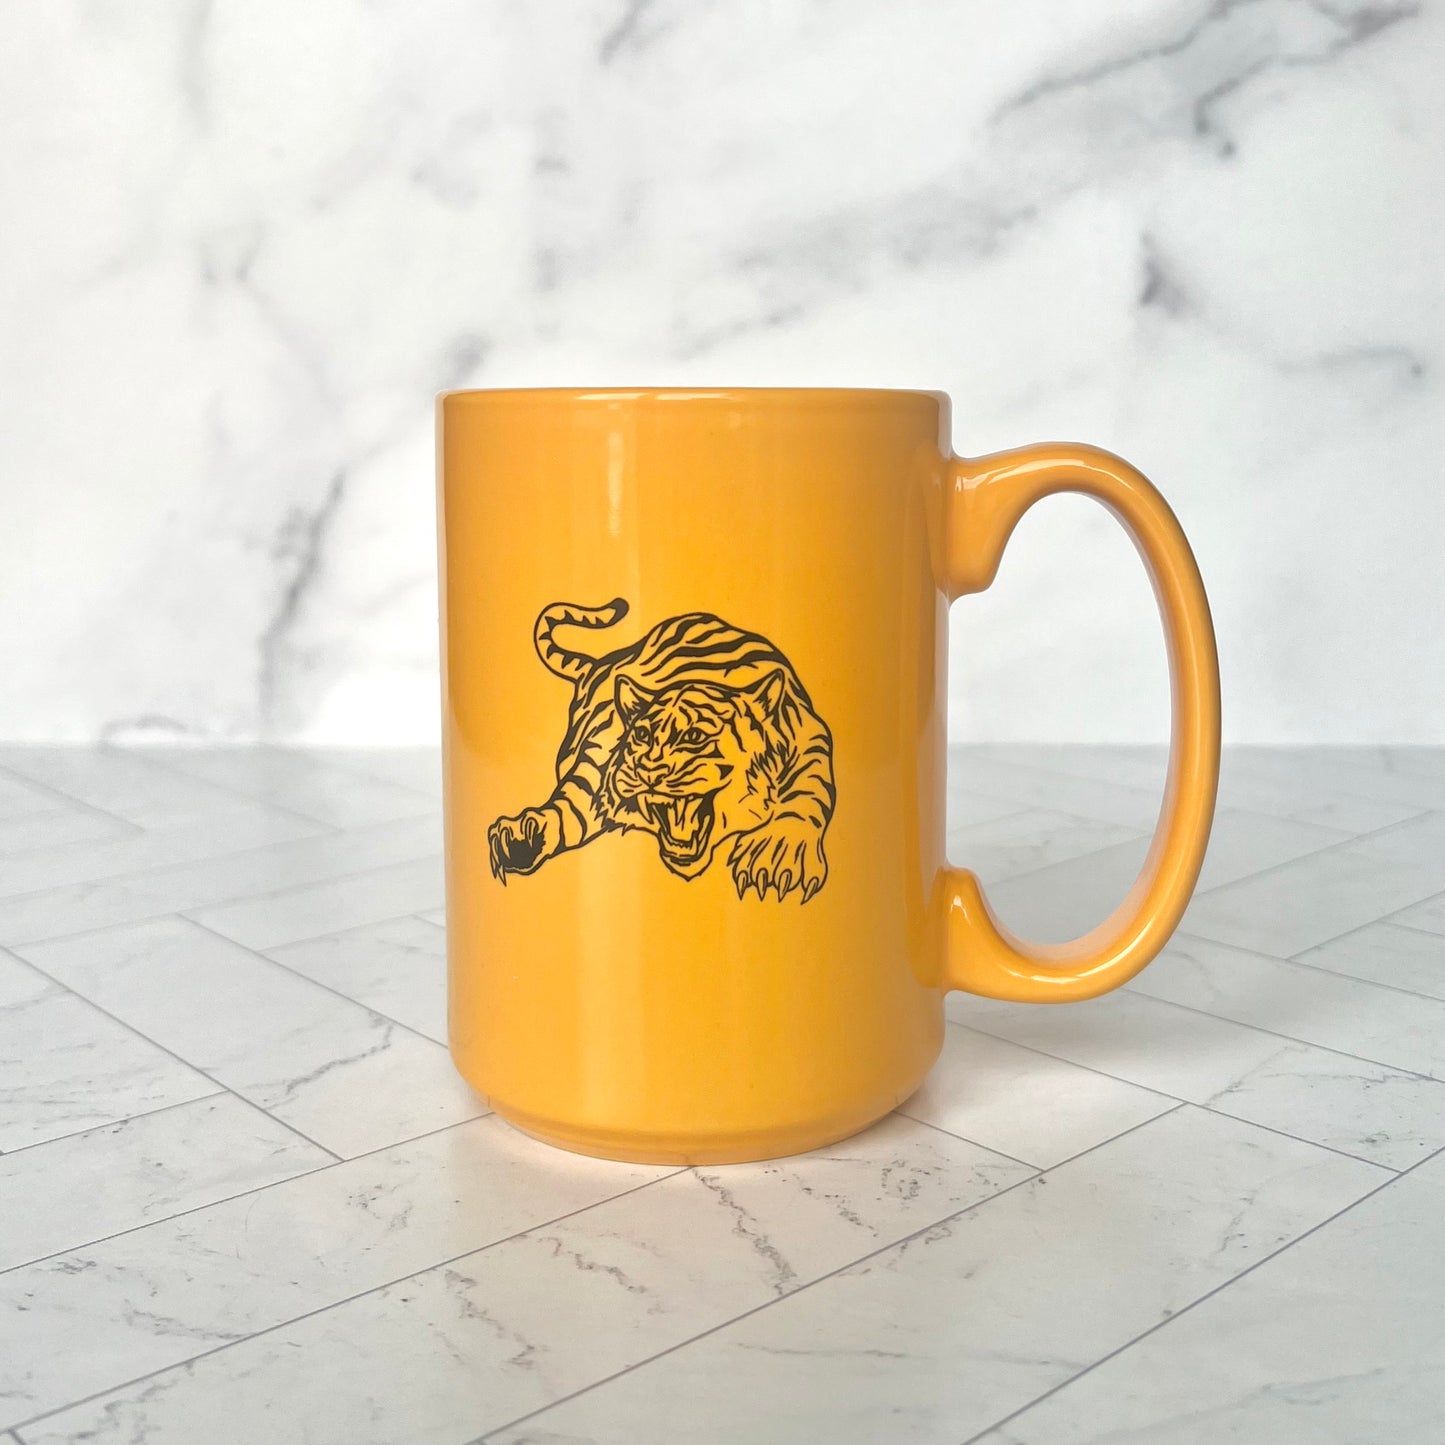 A yellow tiger mug with a handle